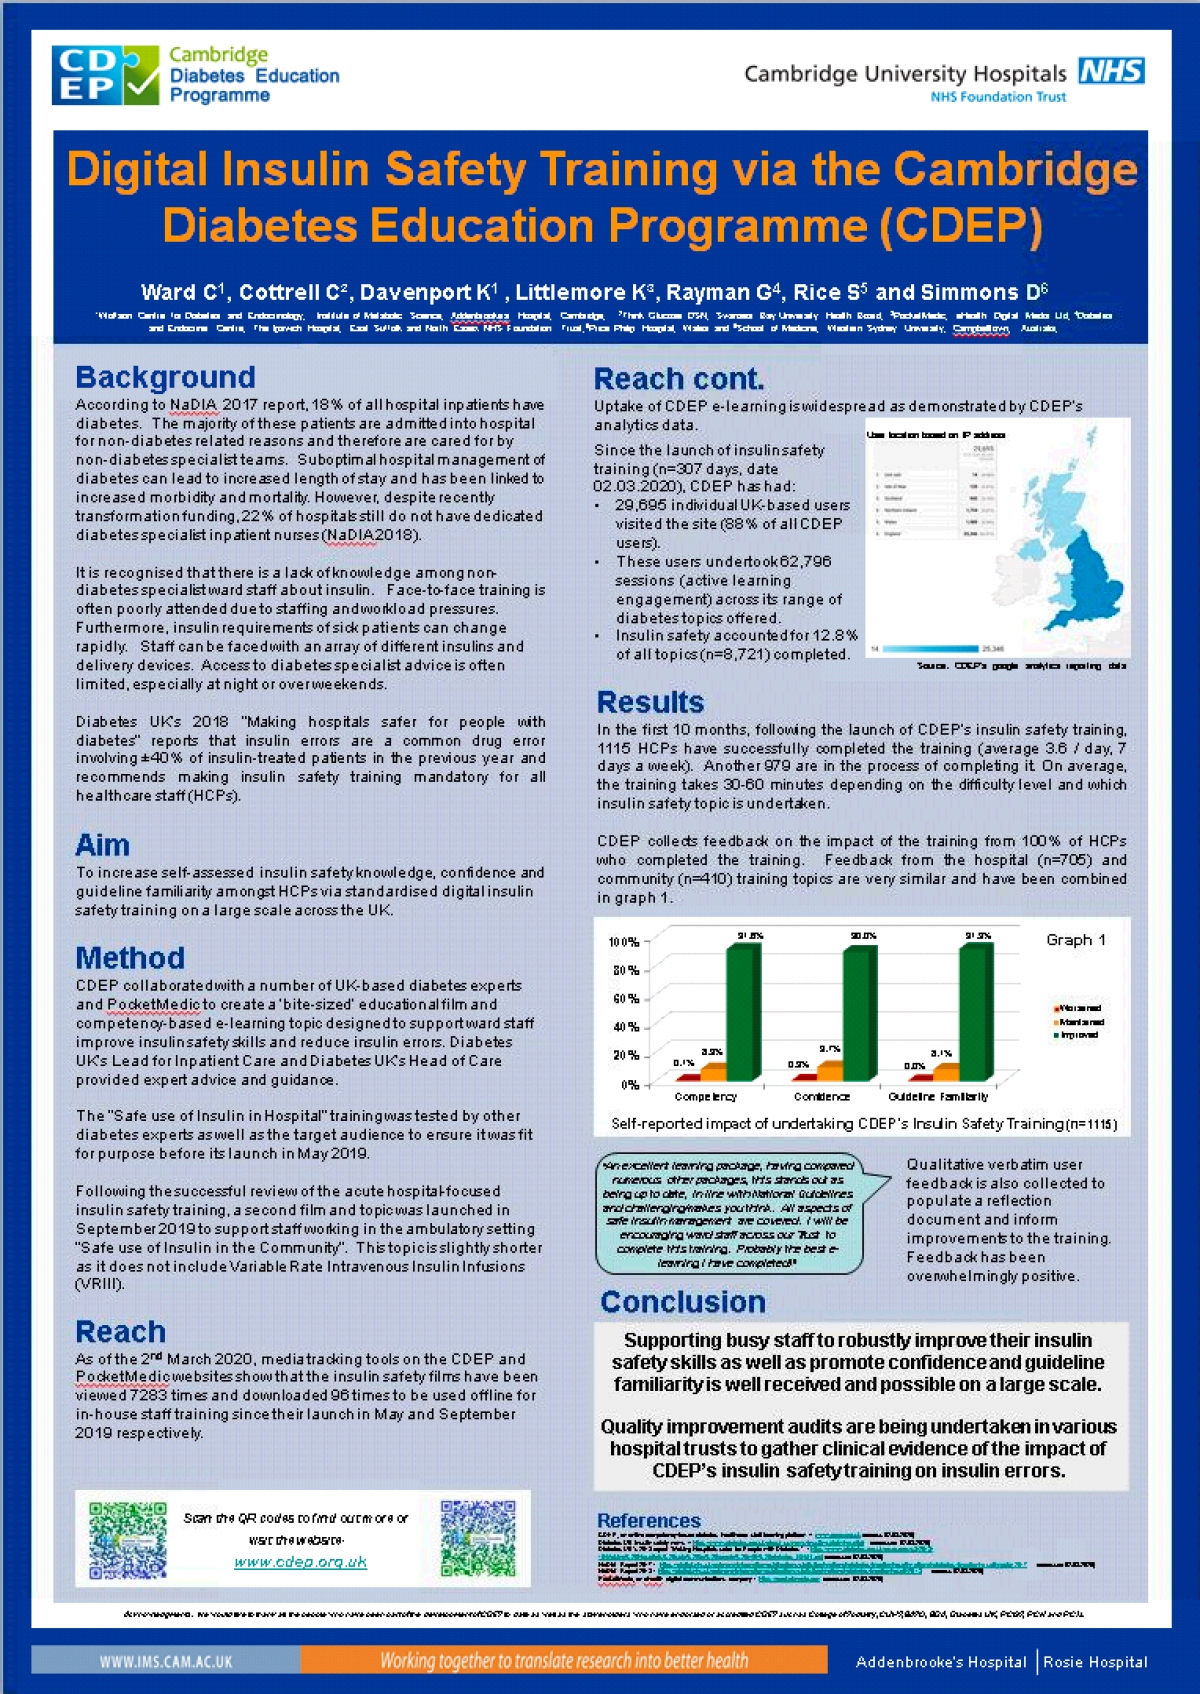 CDEP's Diabetes UK APC 2020 poster on Digital Insulin Safety Training